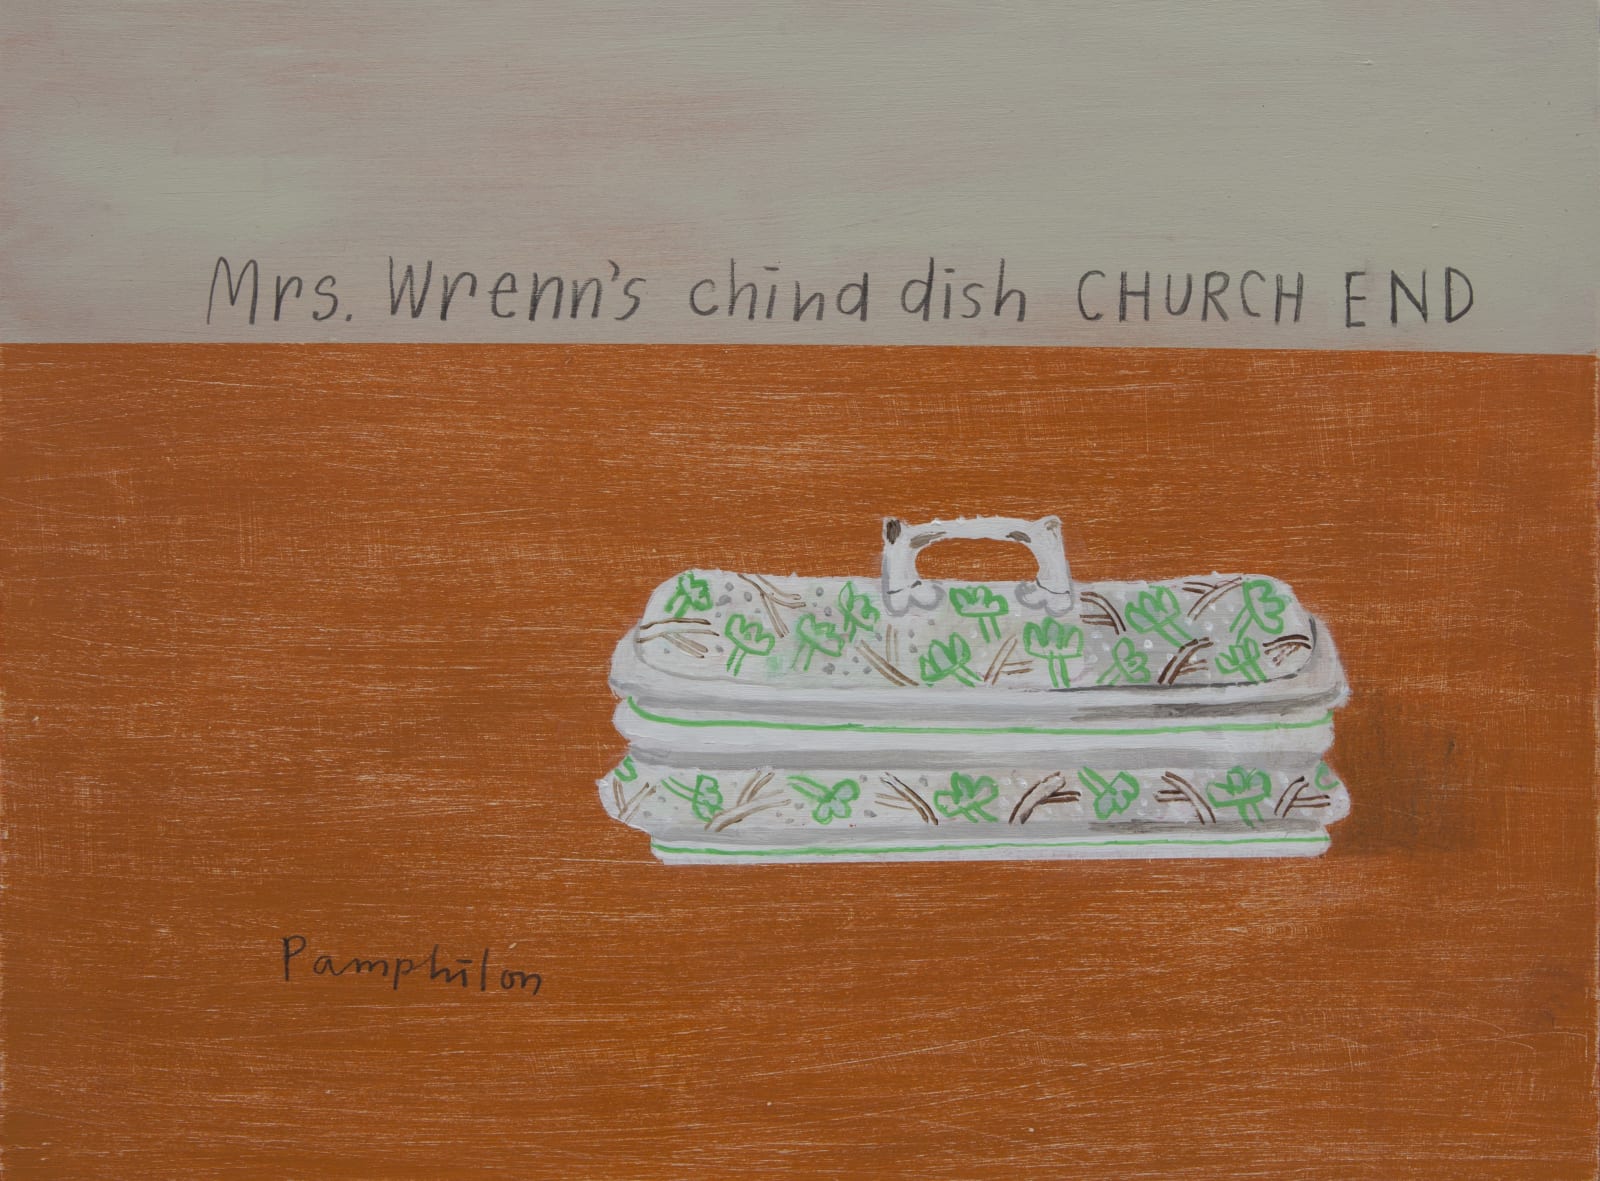 Elaine Pamphilon, Mrs. Wrenn's China Dish, Church End